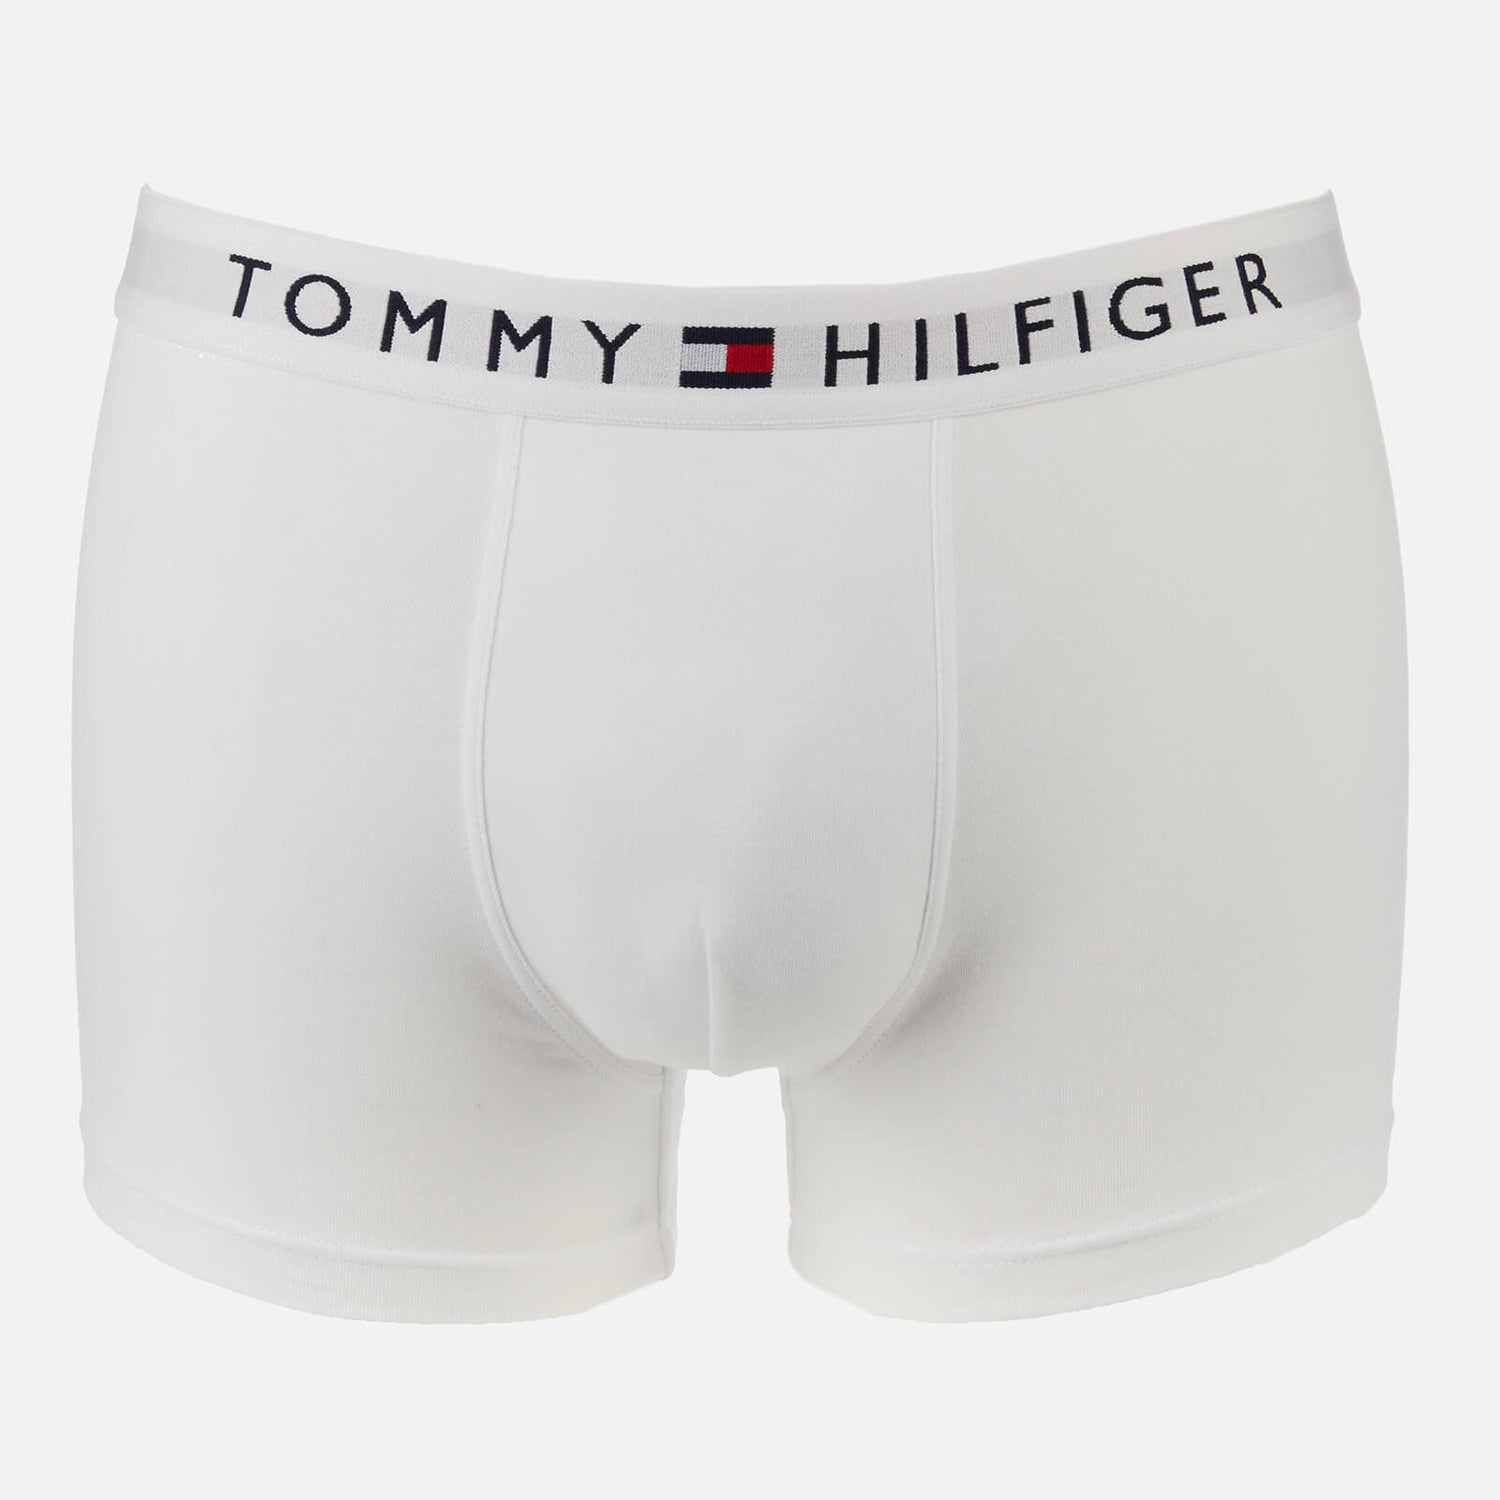 Tommy Hilfiger Men's Tommy Original Cotton Trunks - White - S